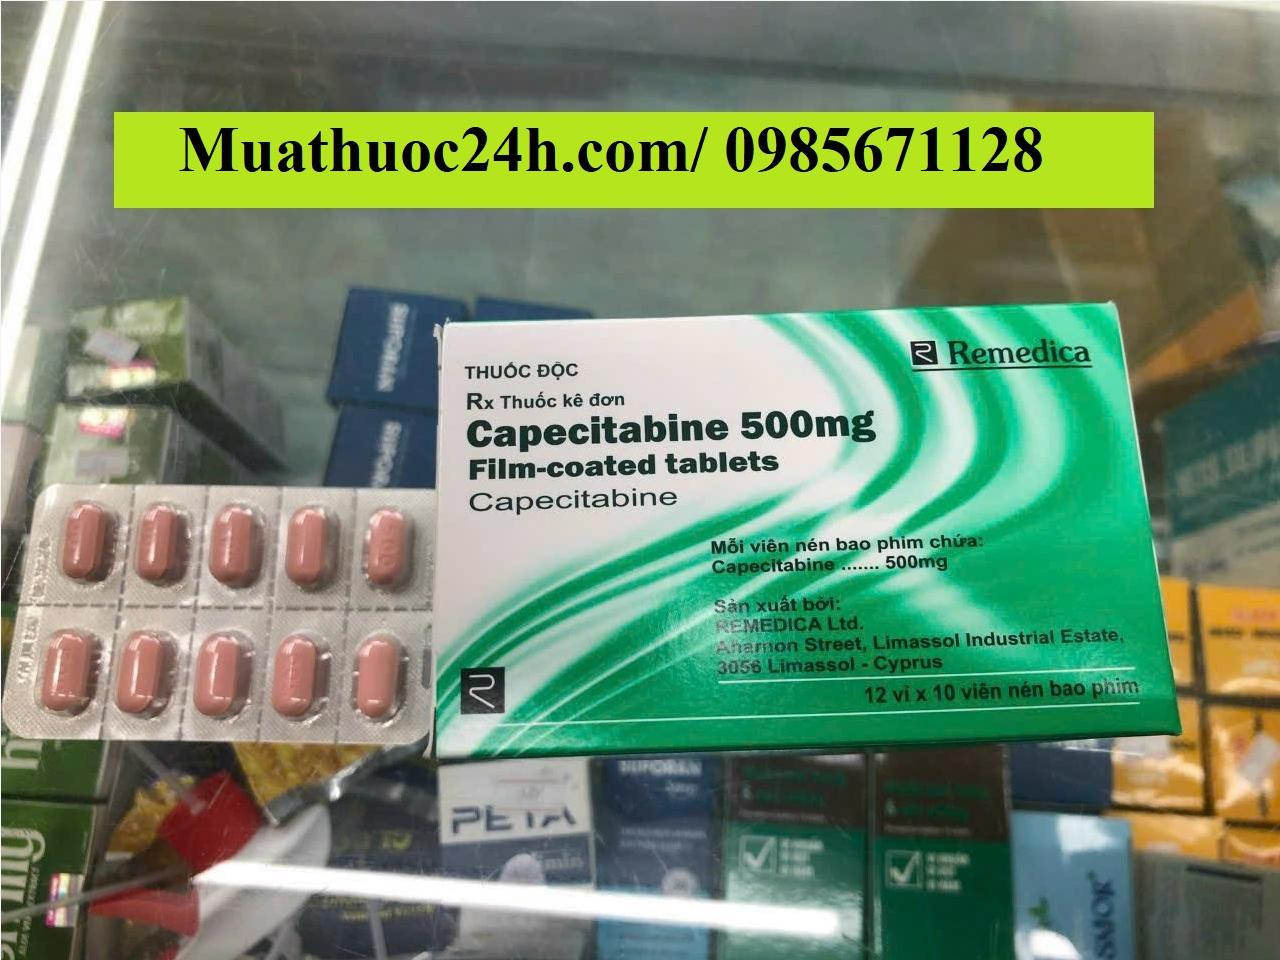 Thuốc Capecitabine 500mg Remedica giá bao nhiêu mua ở đâu?